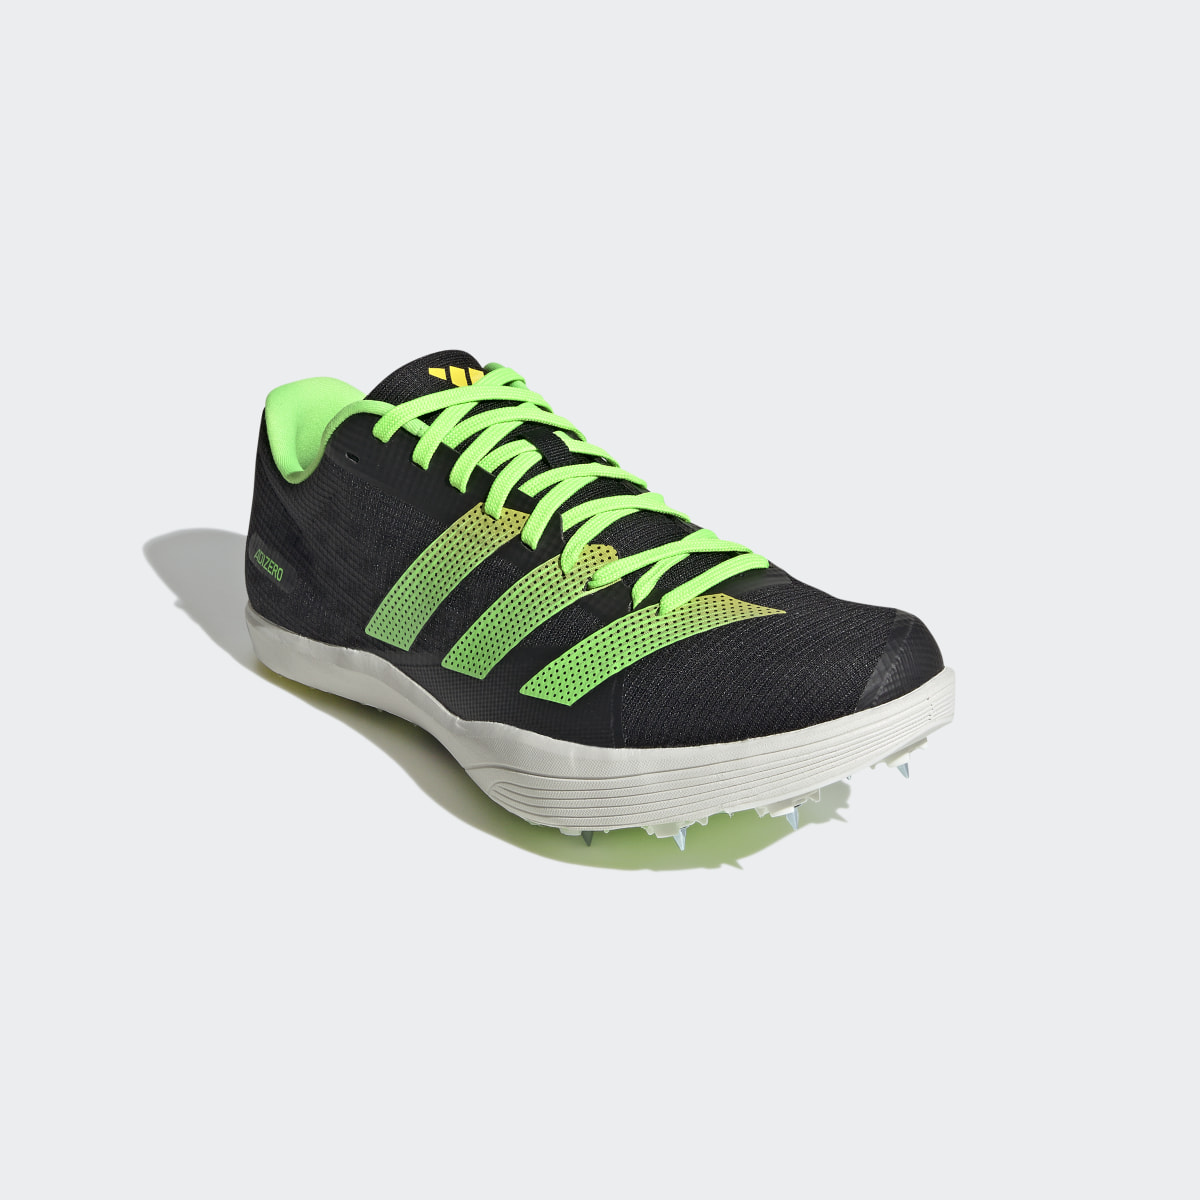 Adidas Adizero Long Jump Shoes. 5